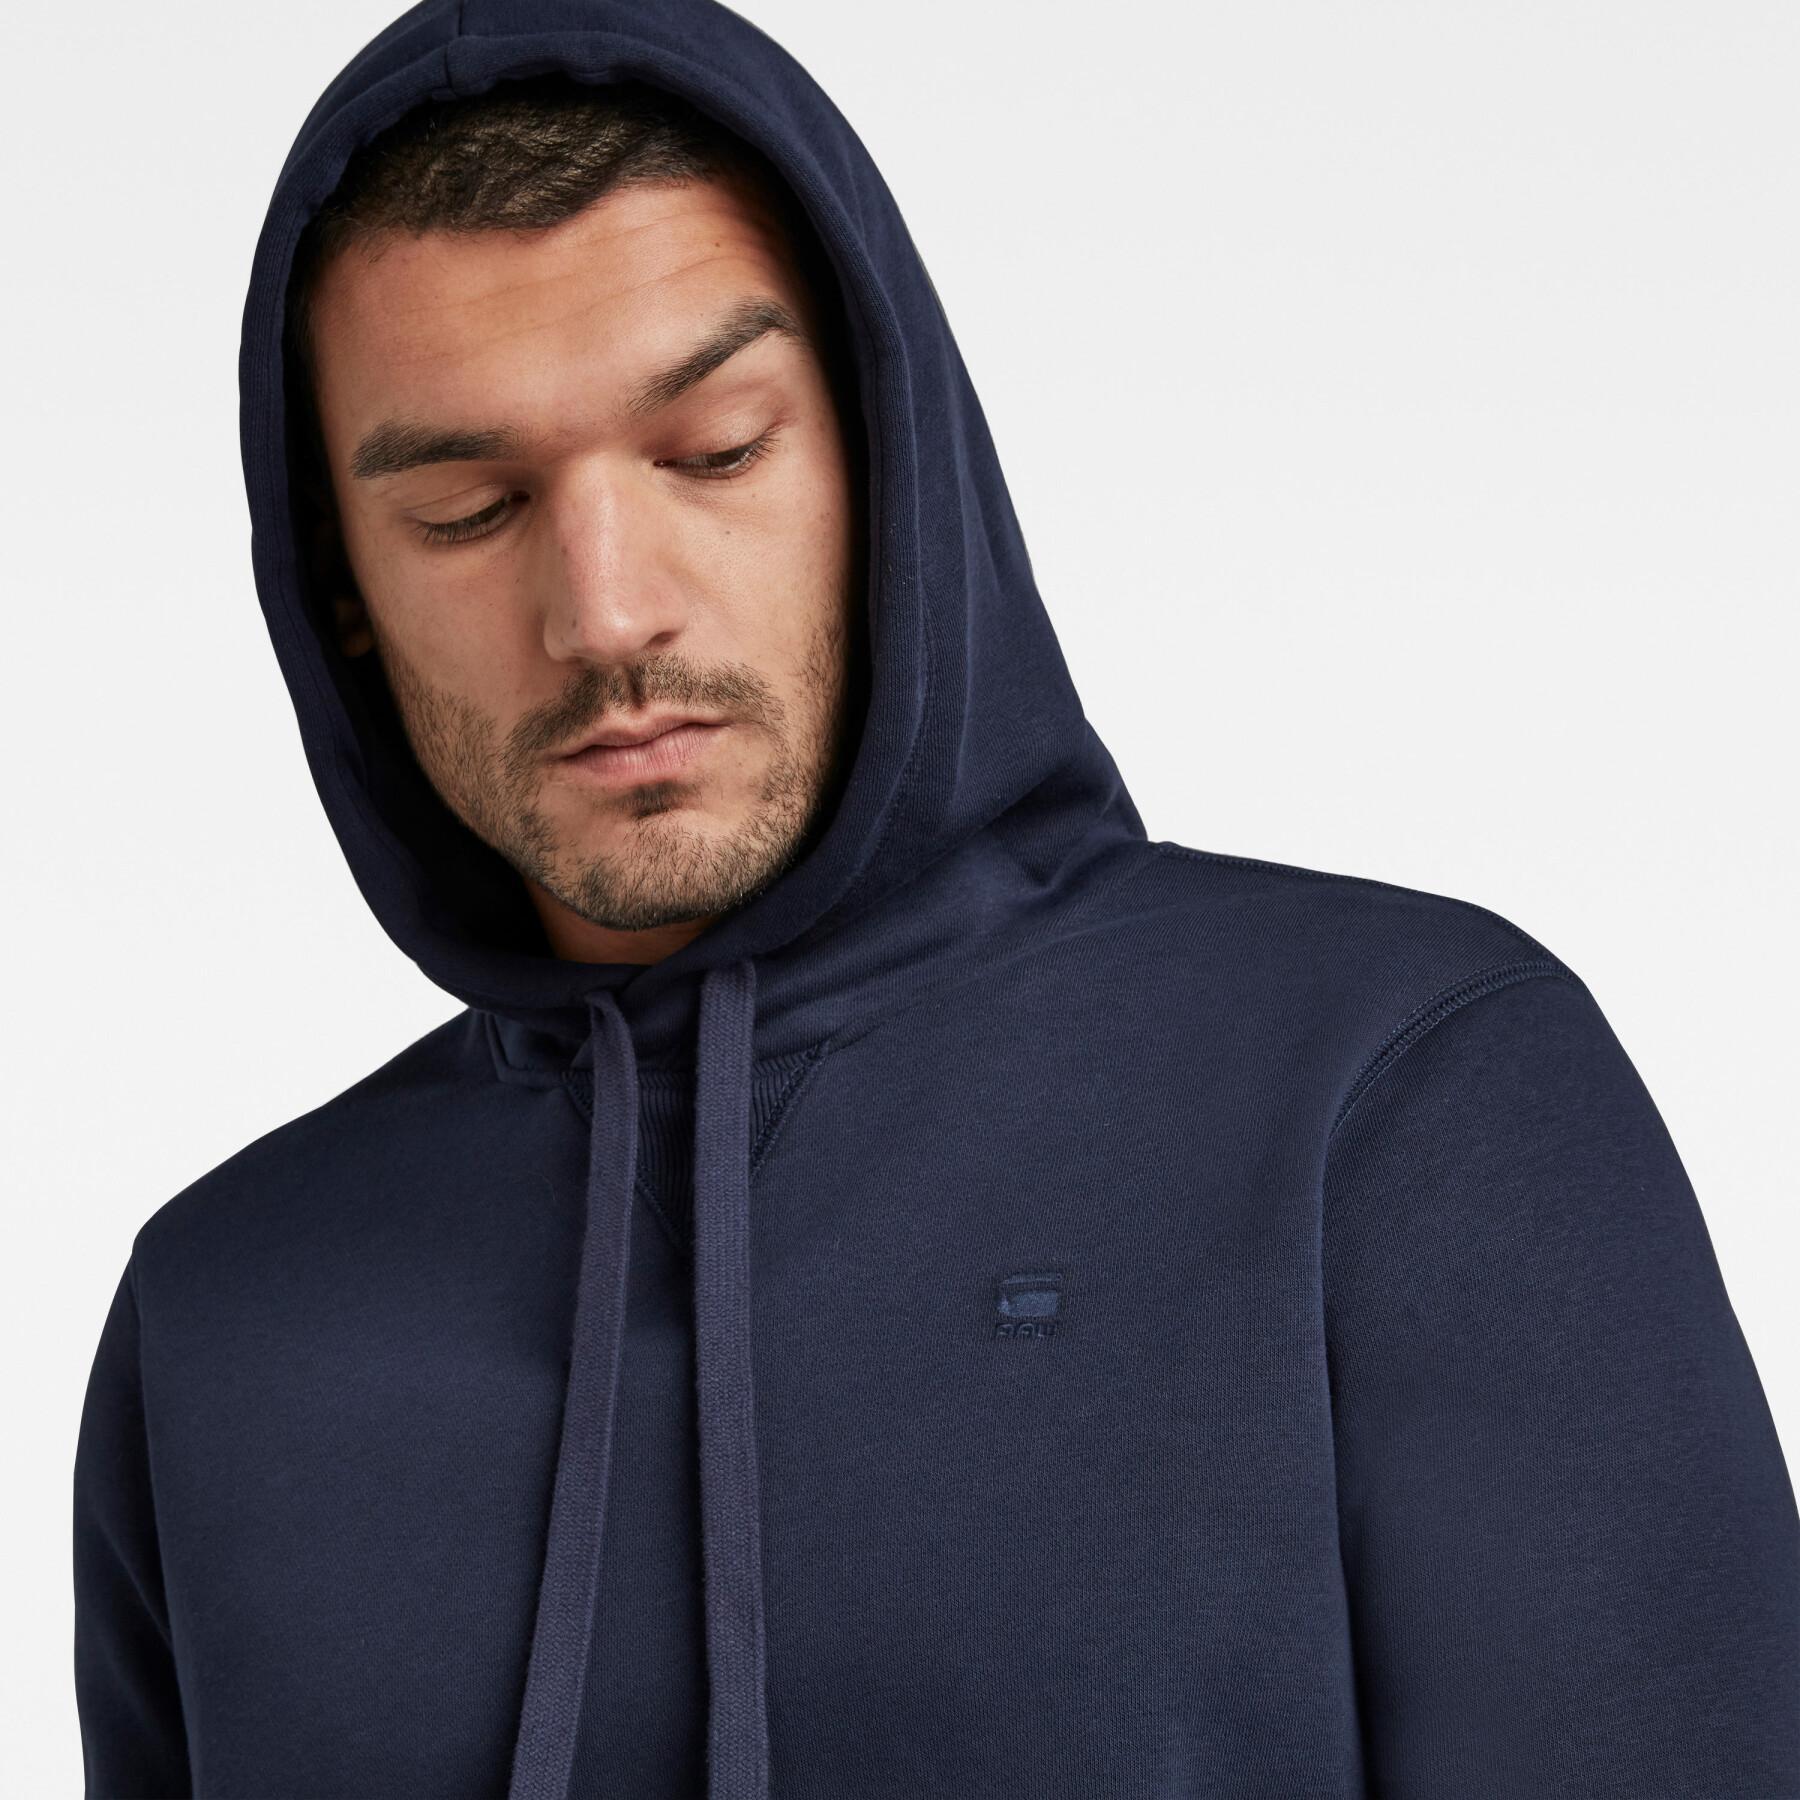 Hooded sweatshirt G-Star Premium Basic